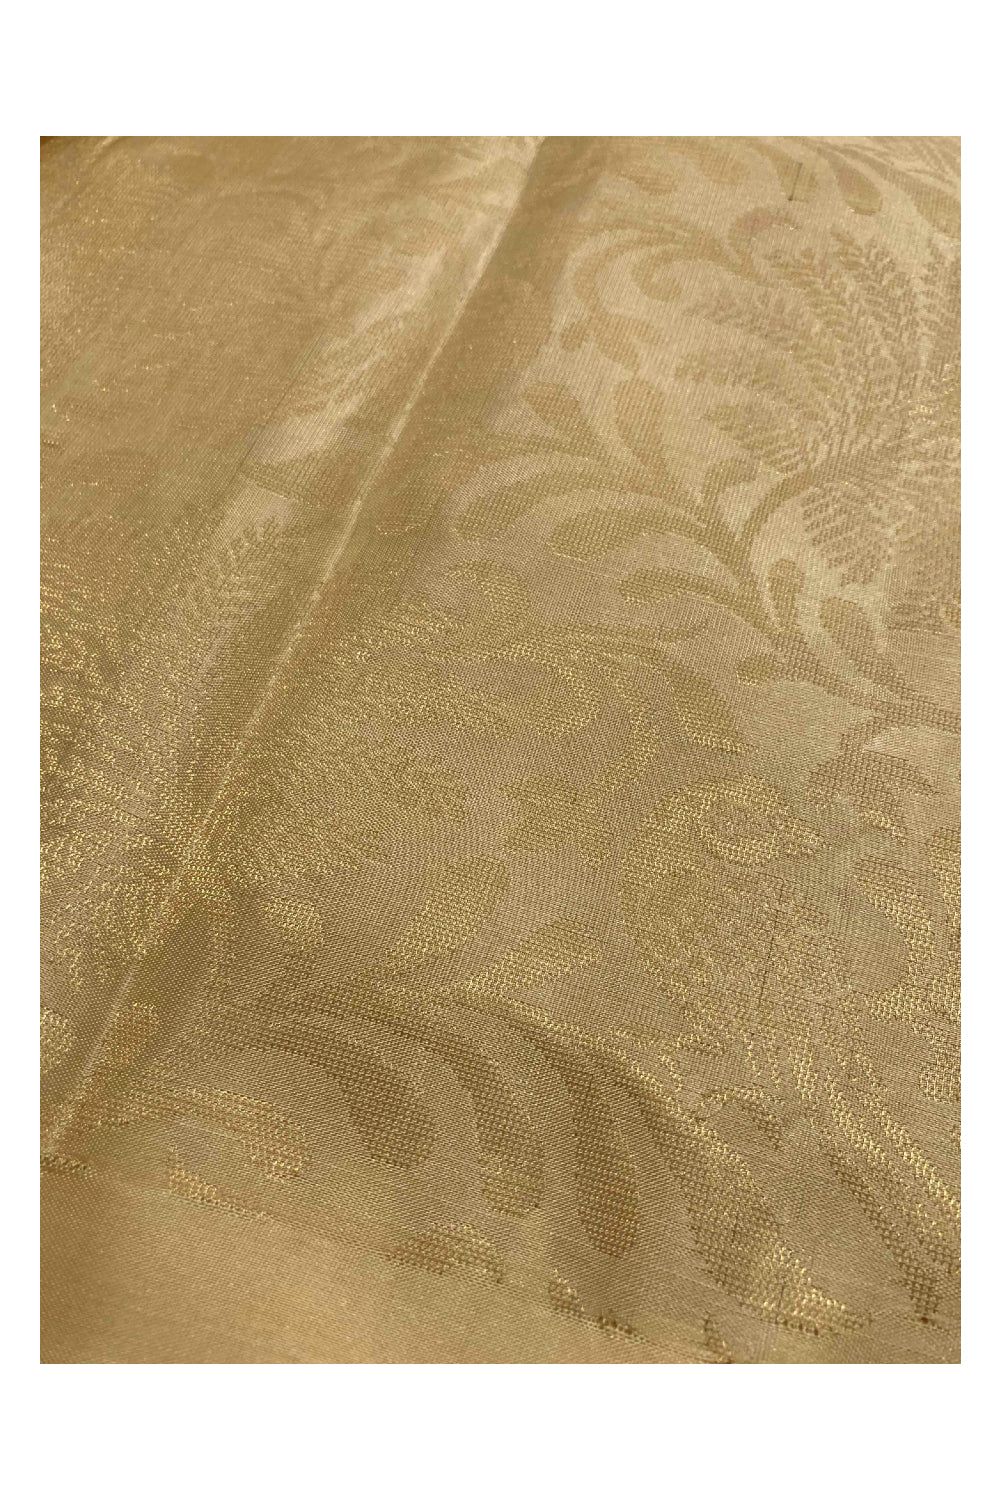 Southloom Handloom Pure Silk Manthrakodi Kanchipuram Saree in Single Beige Colour and Silver Zari Motifs